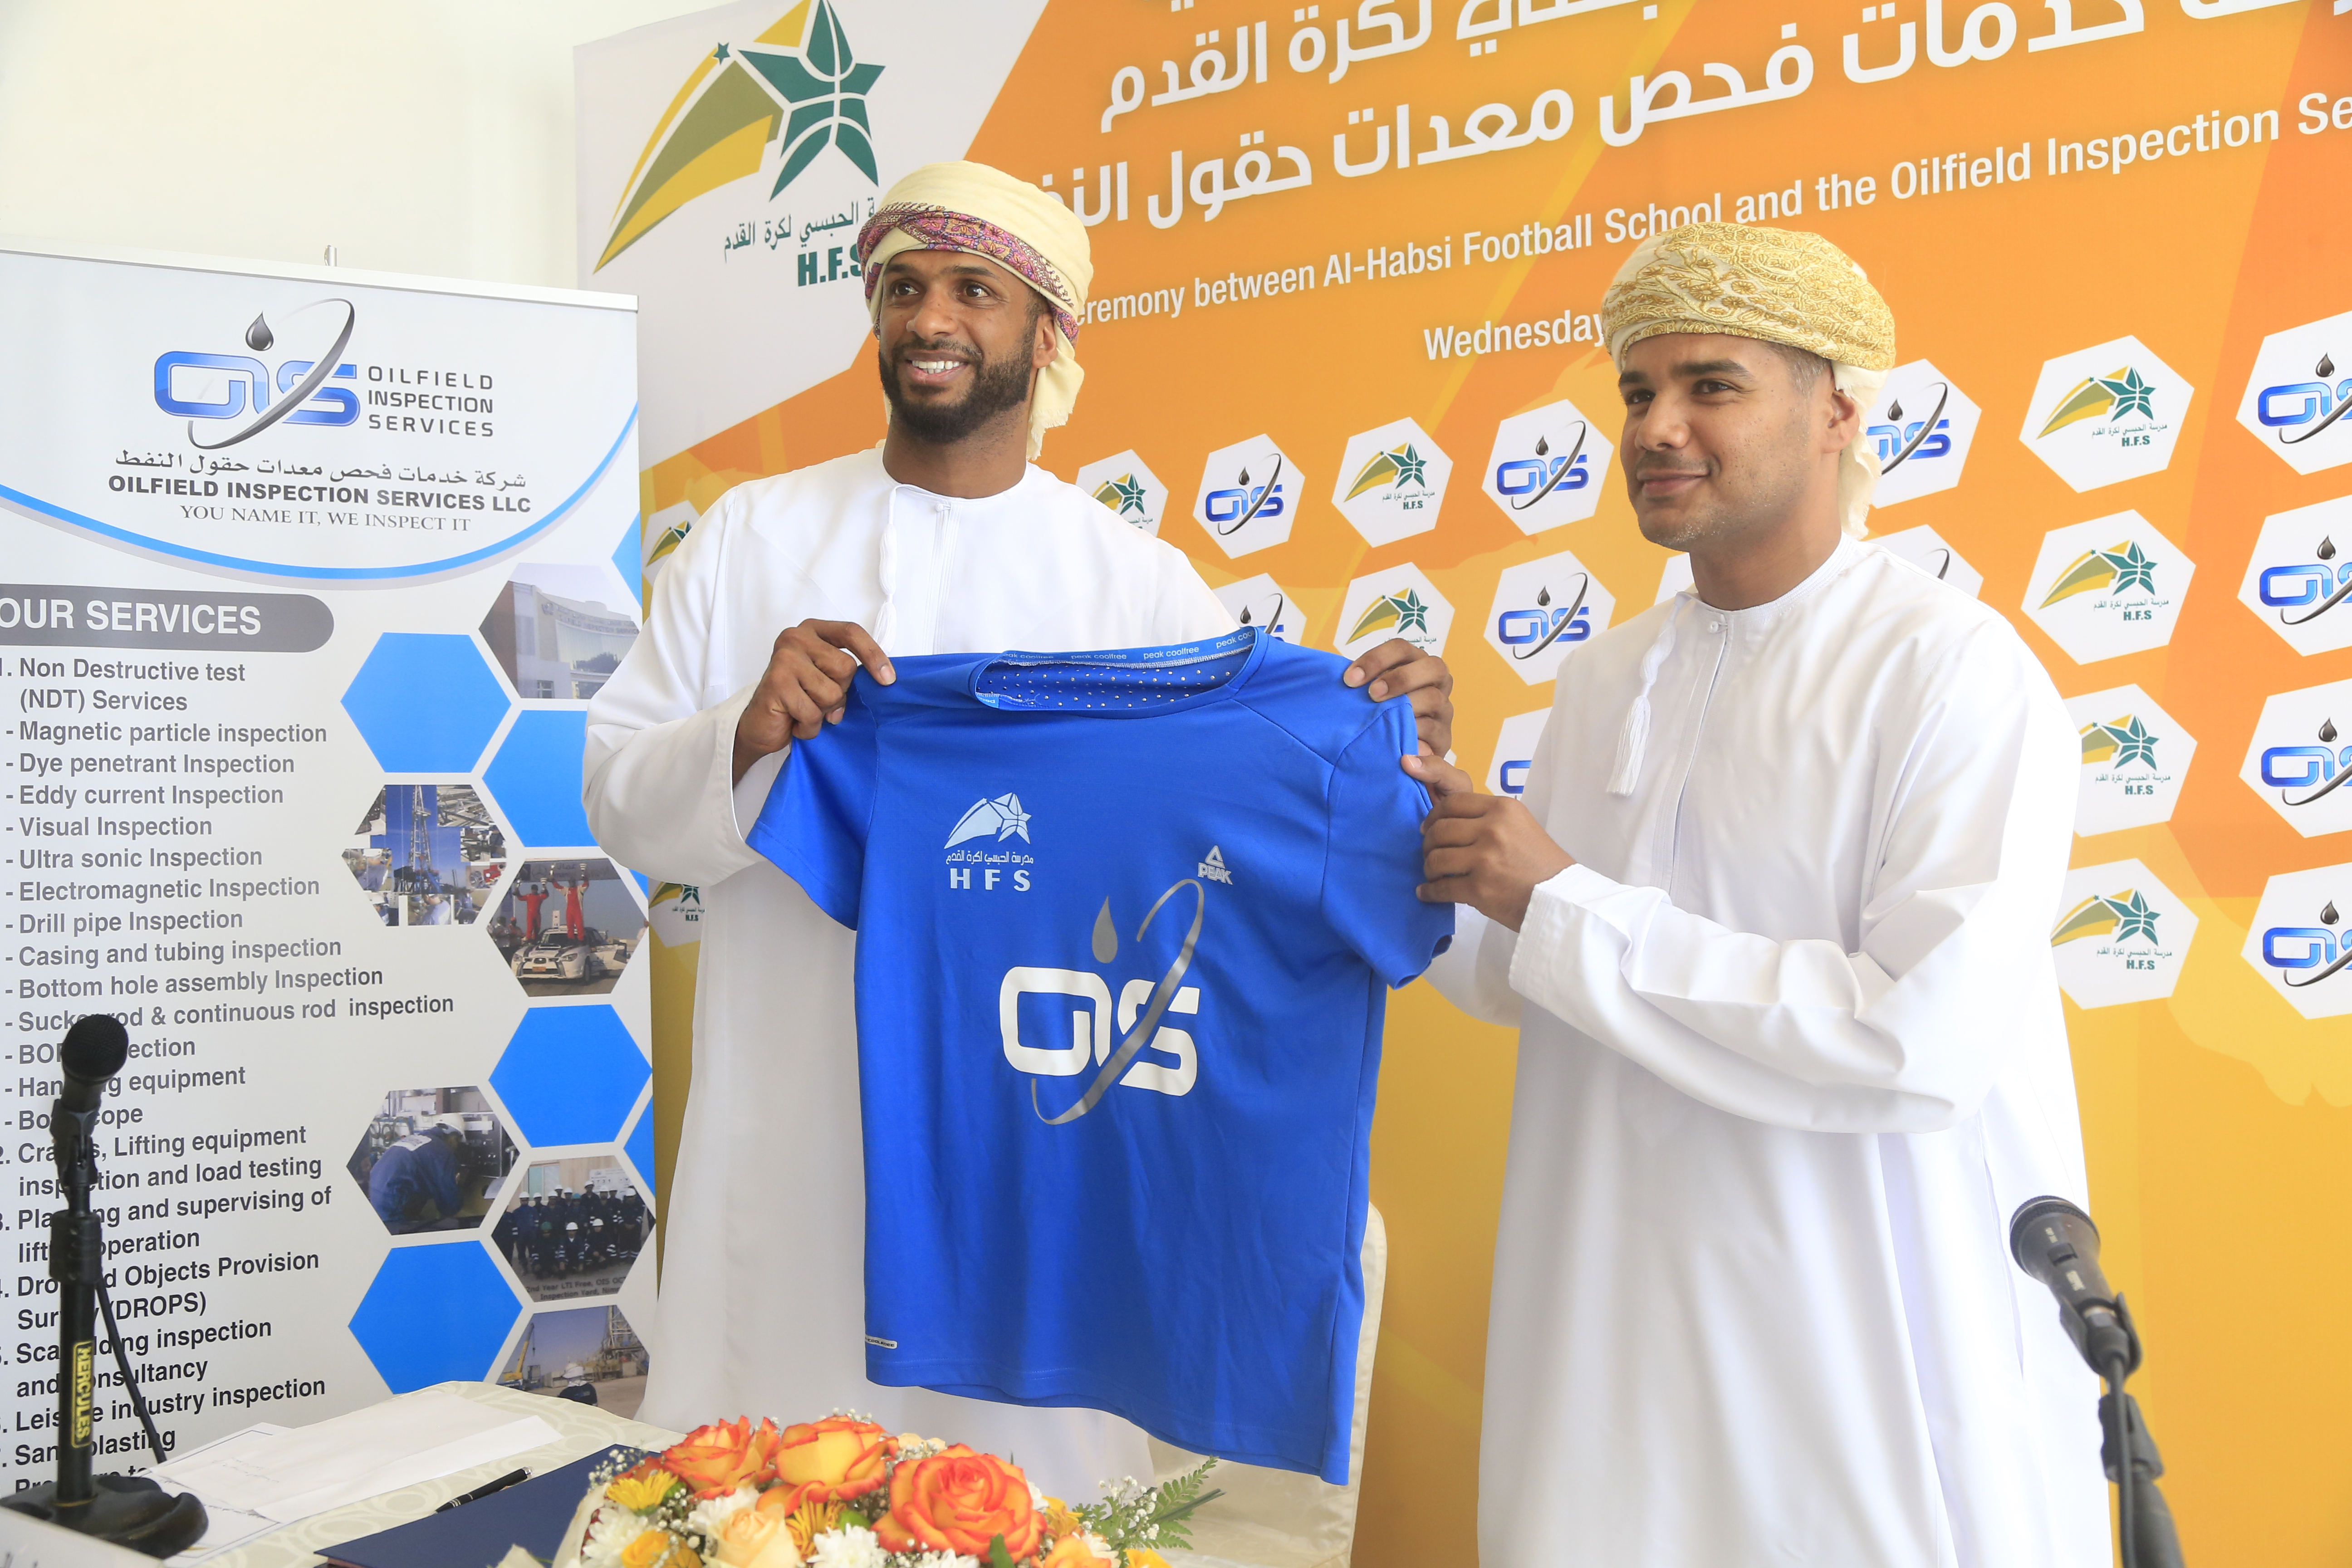 Al Habsi Football School gets new partner in Oilfield Inspection Services